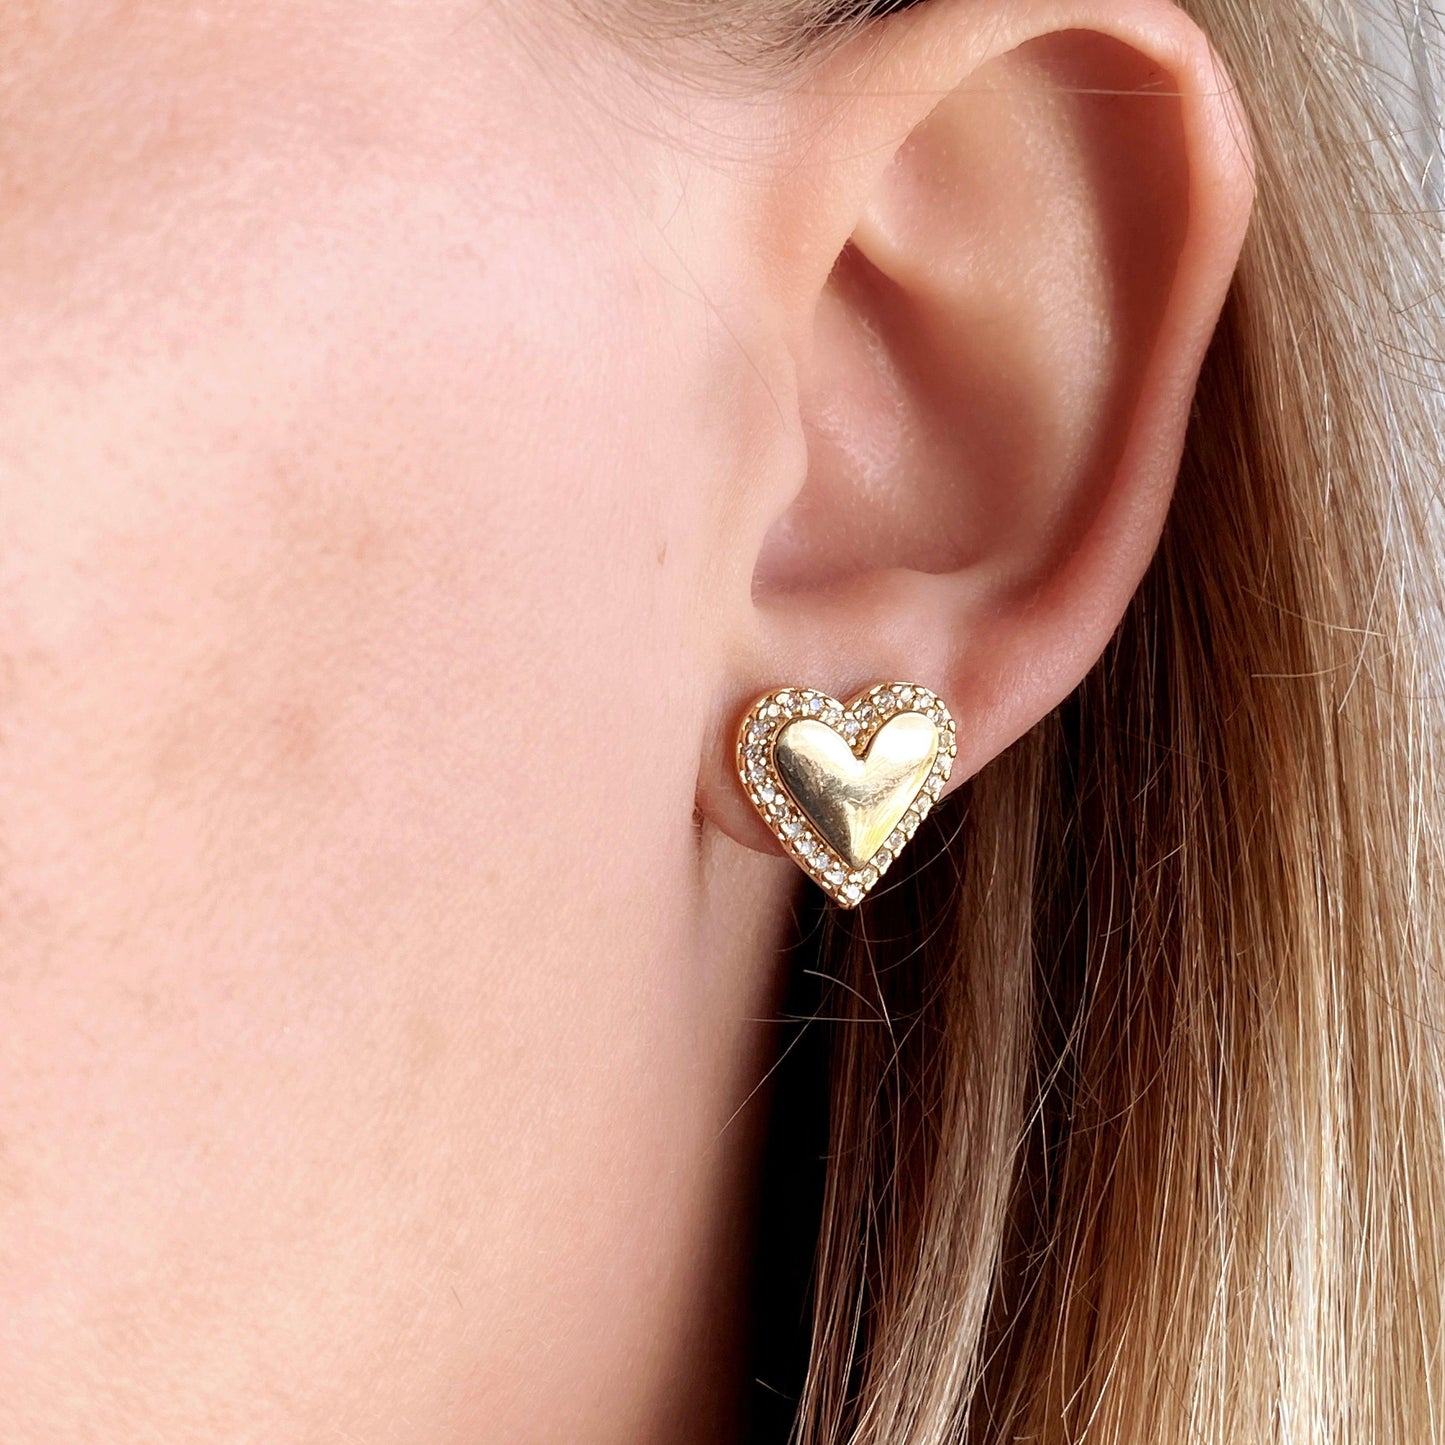 GoldFi 18k Gold Filled Pillow Heart Stud Earrings Cubic Zirconia Stones Around